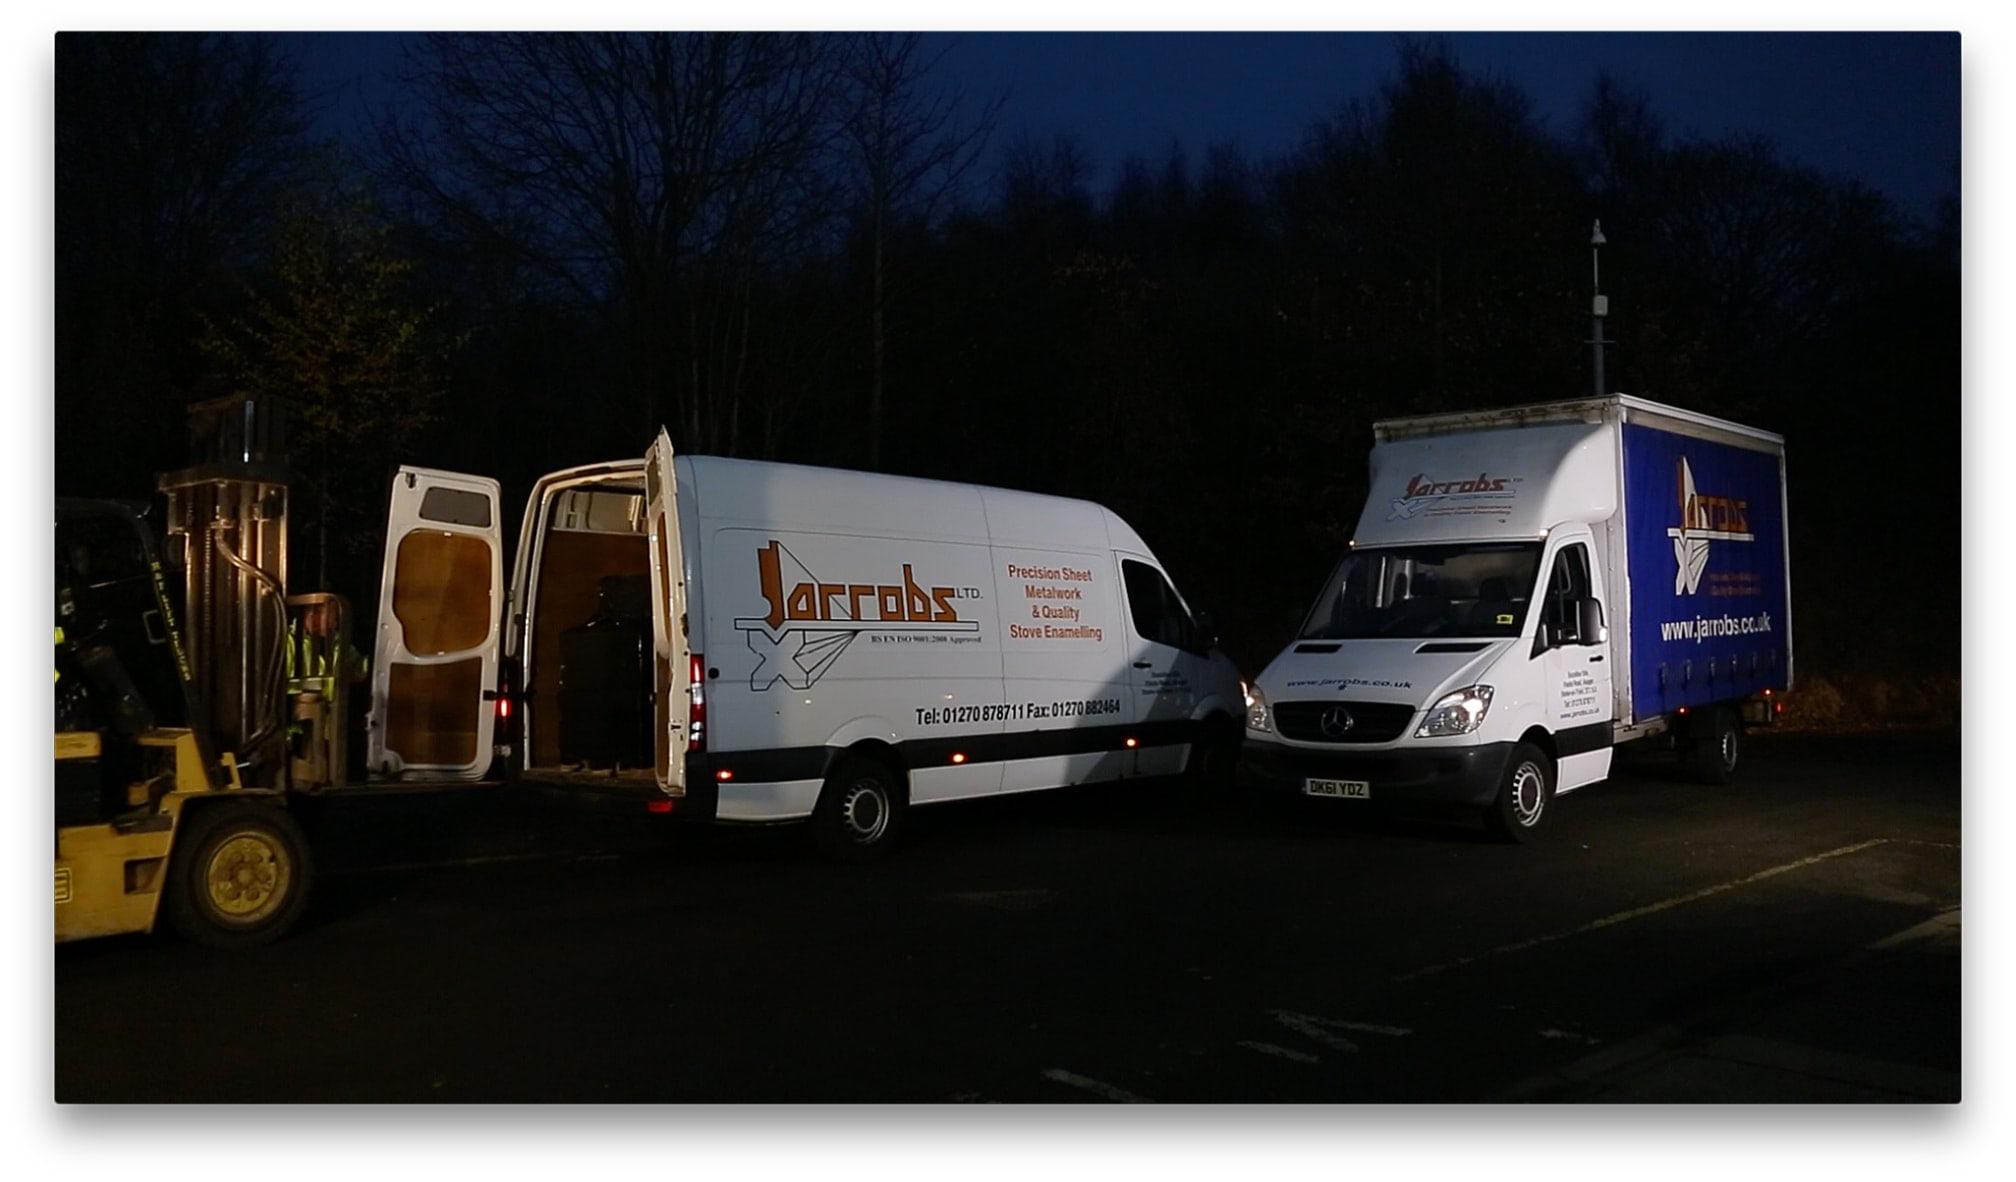 Jarrobs Ltd Stoke-On-Trent 01270 878711